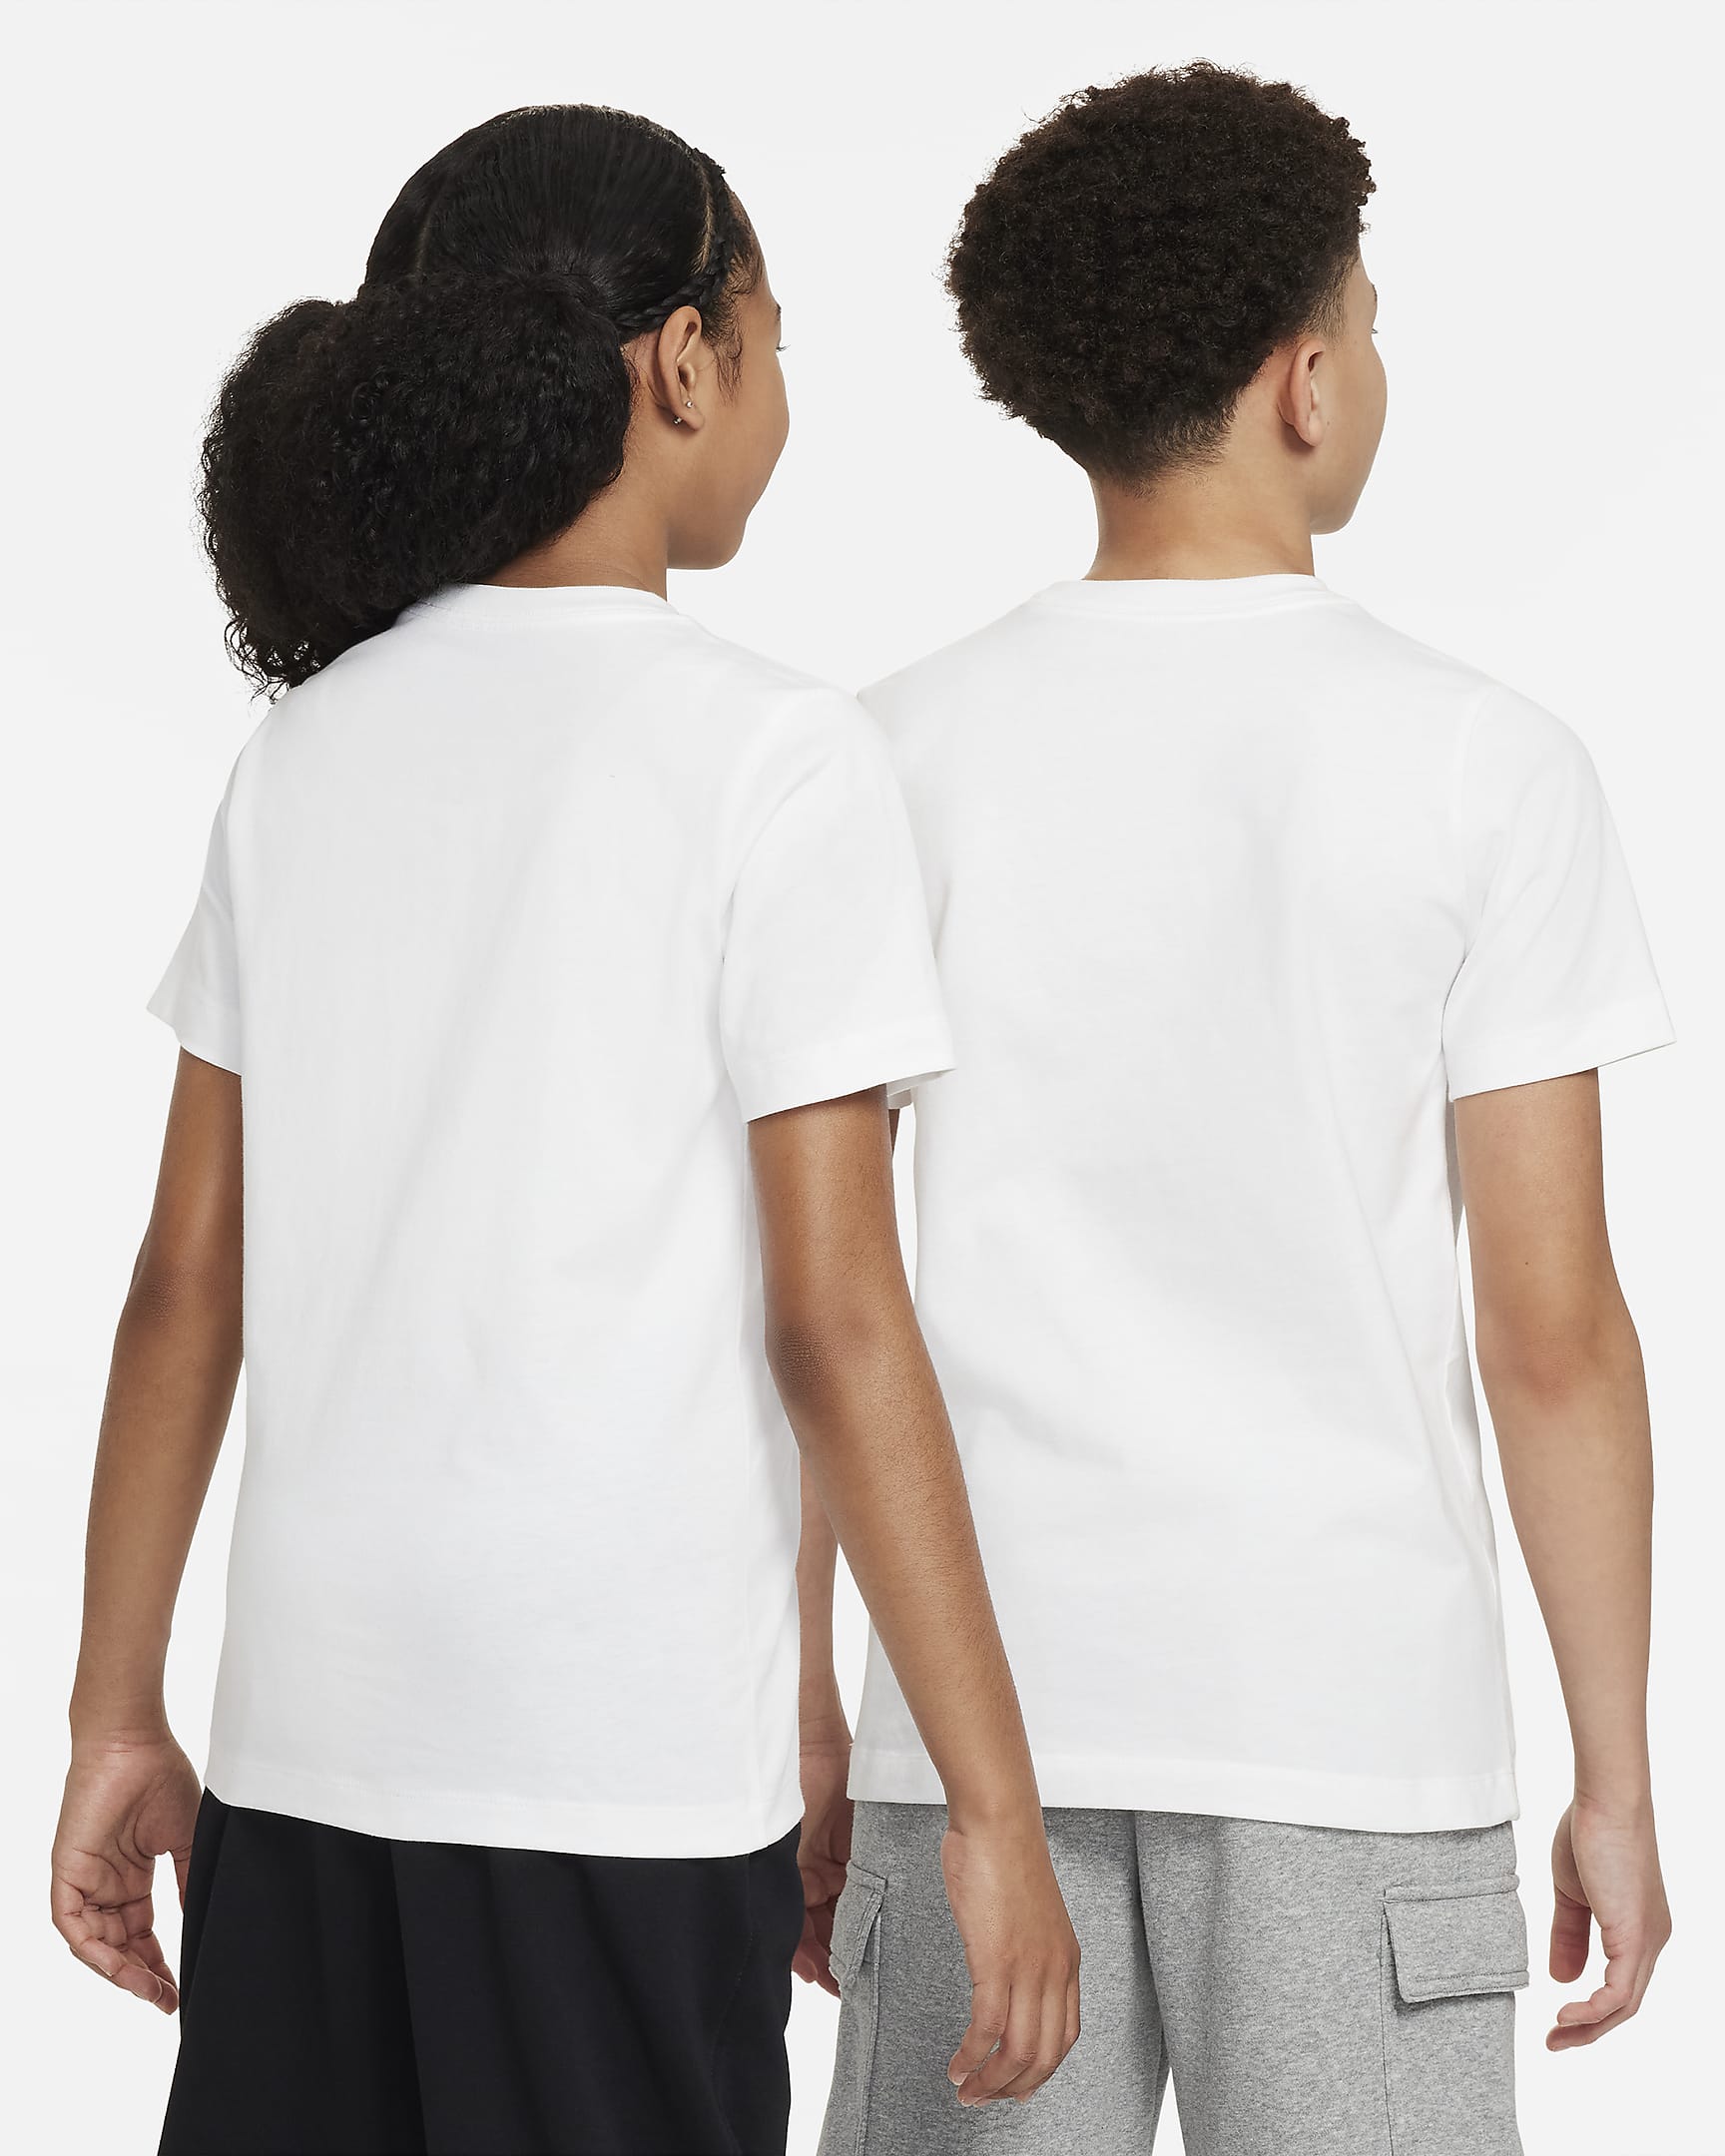 Liverpool F.C. Older Kids' Nike Football T-Shirt - White